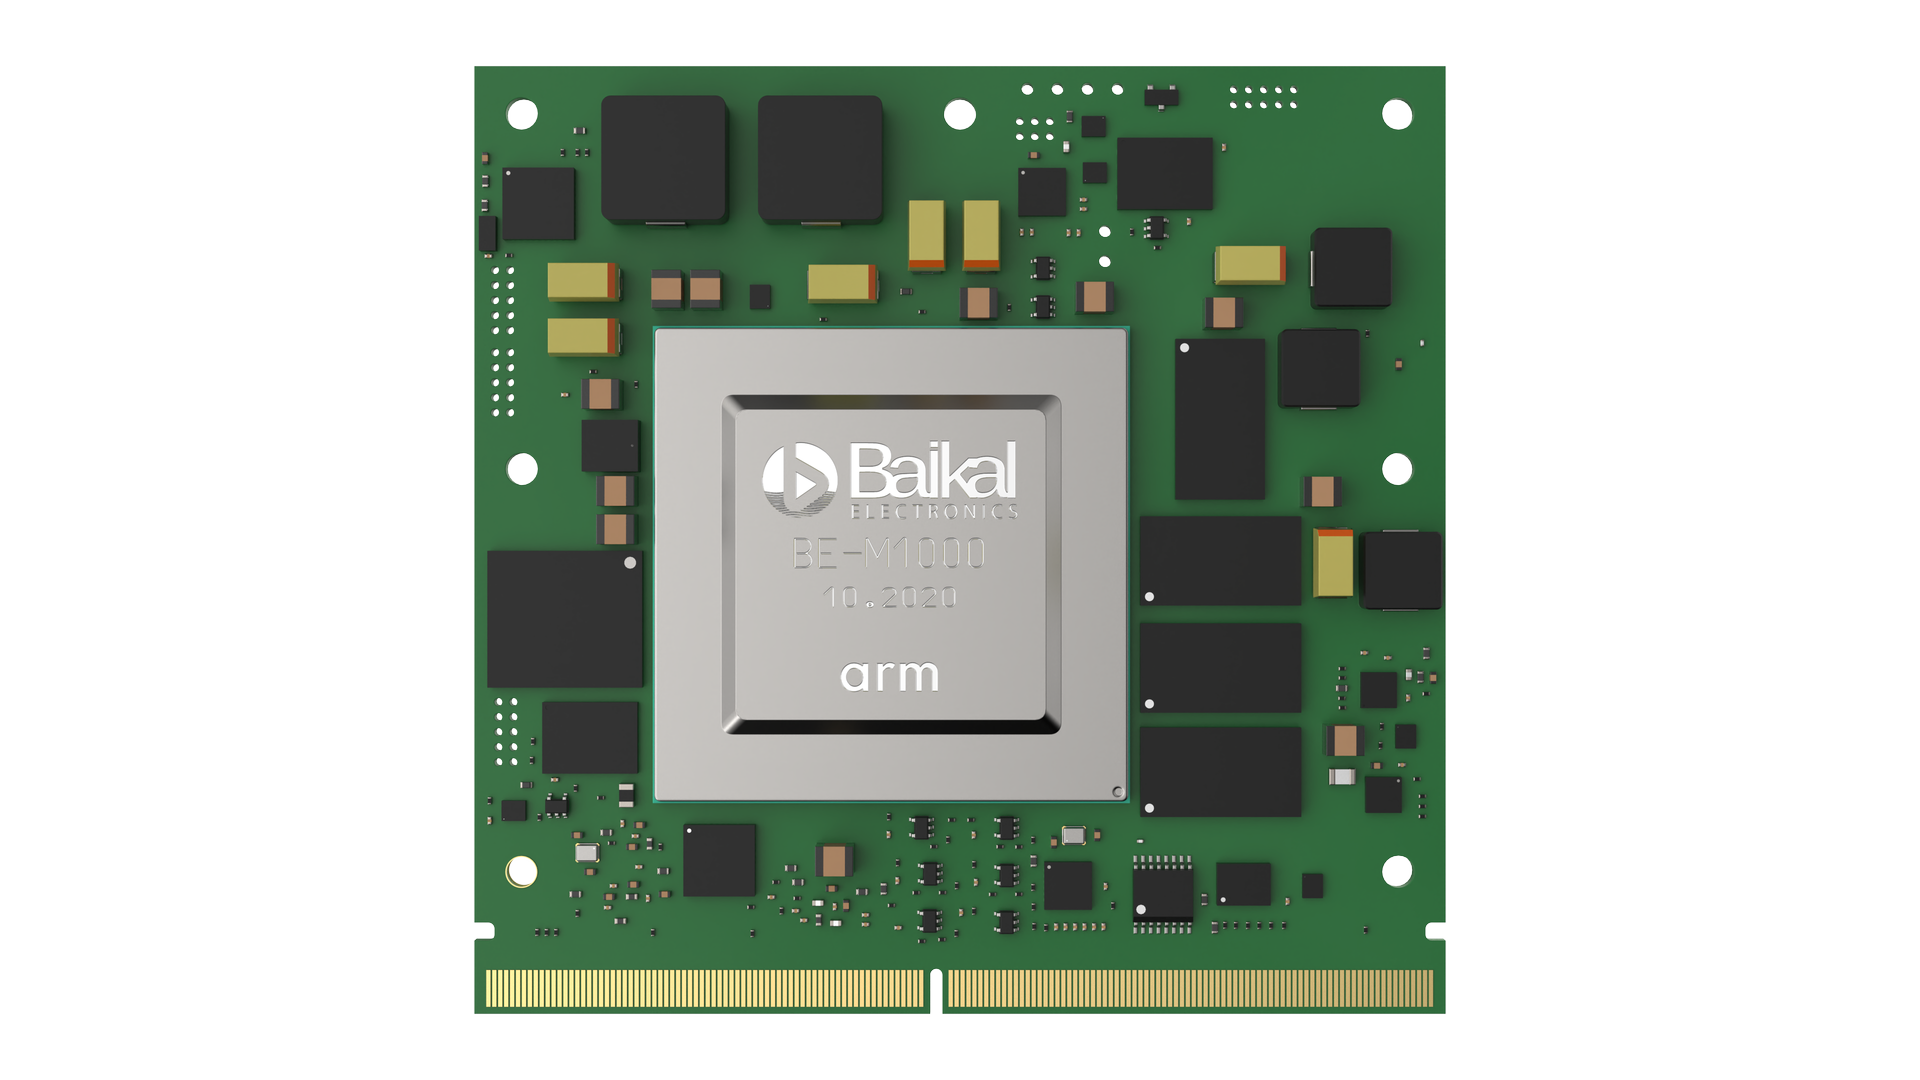 АТБ-БАЙКАЛ-SMARC SOM модуль SMARC Intel BE-M1000 1,5ГГц